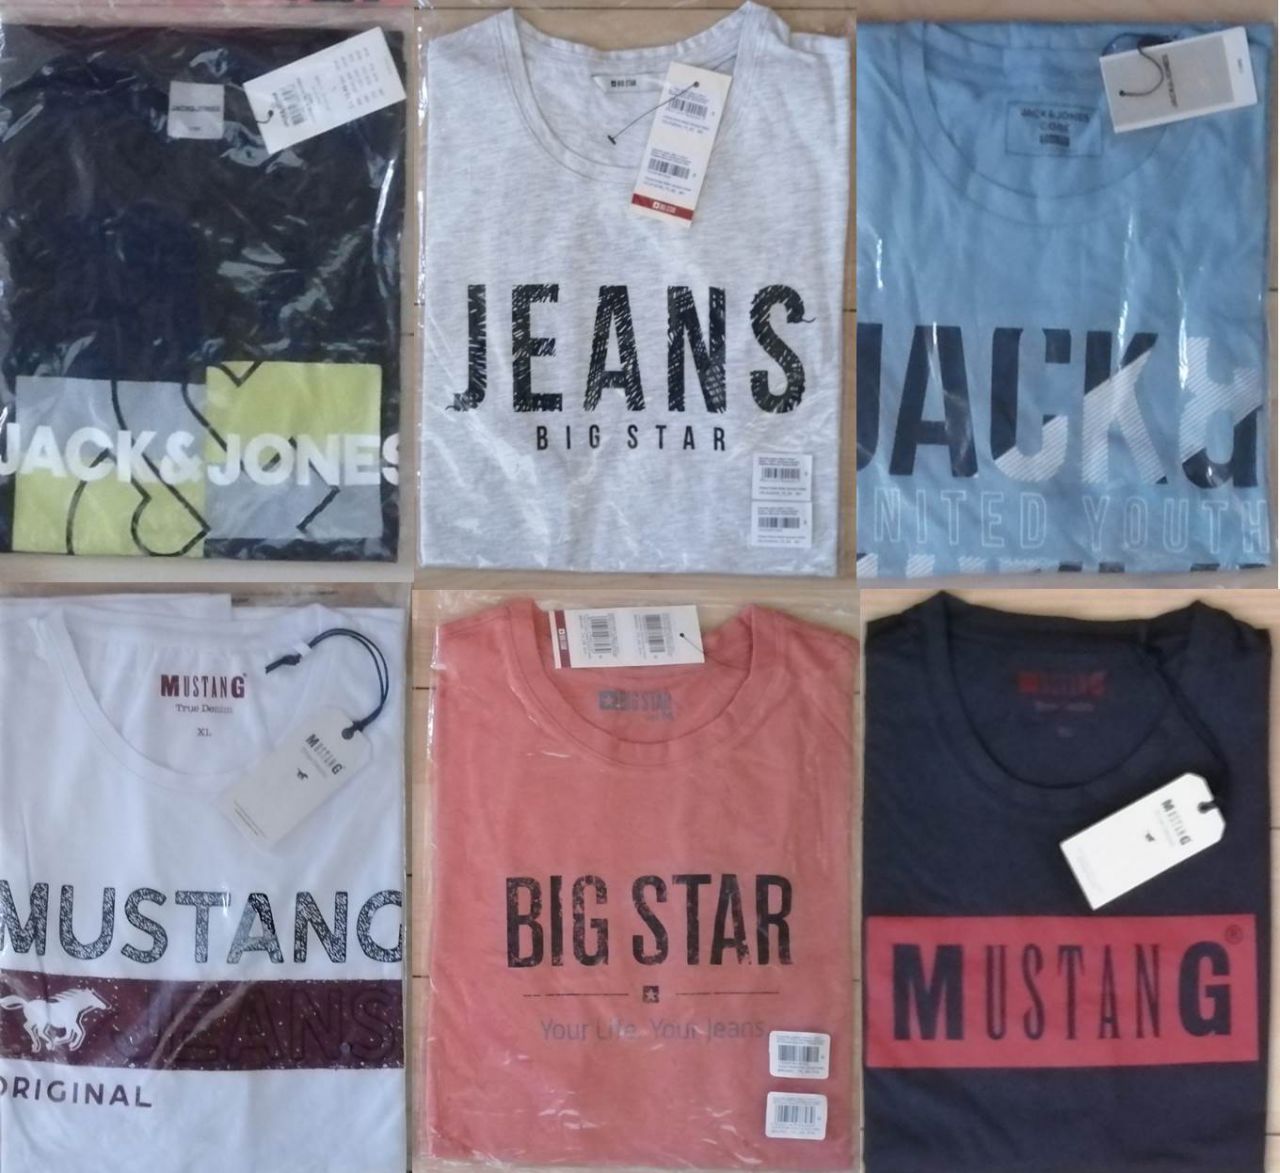 Mustang, Big Star, Jack and Jones férfi póló mix 2 300 Ft (6,5 Euro) / darab áron kaphatók!